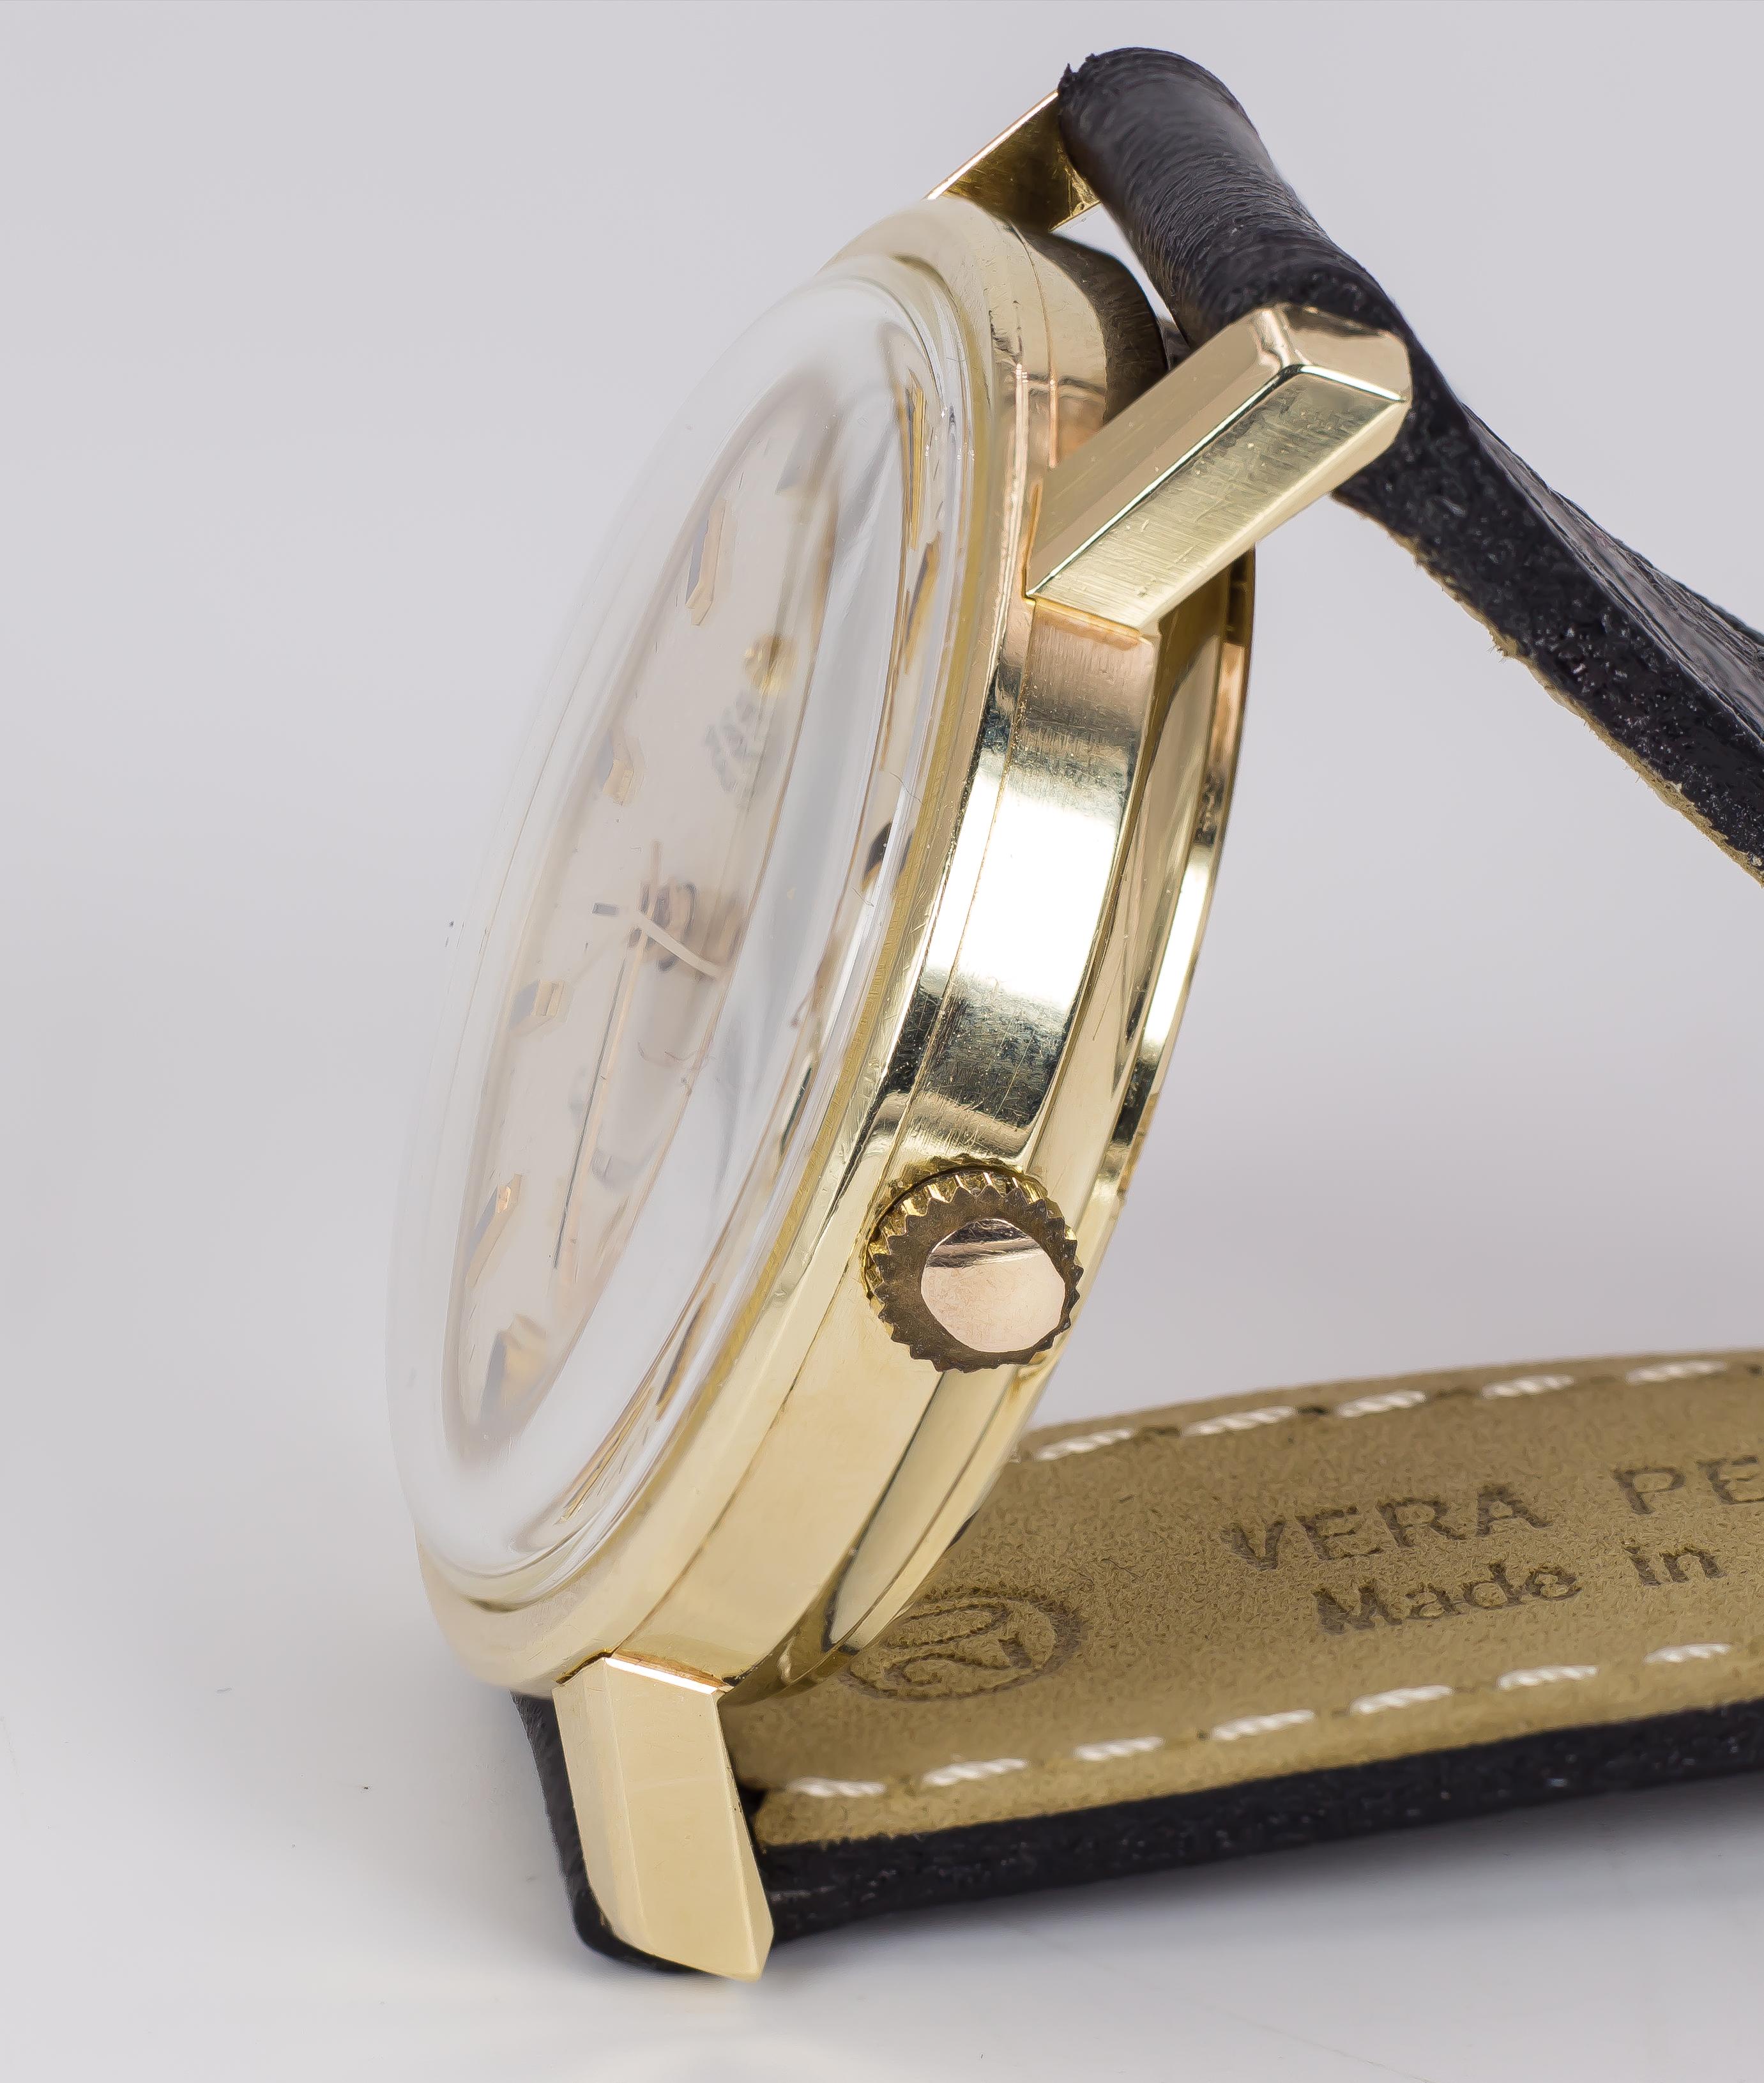 omega automatic chronometer constellation gold